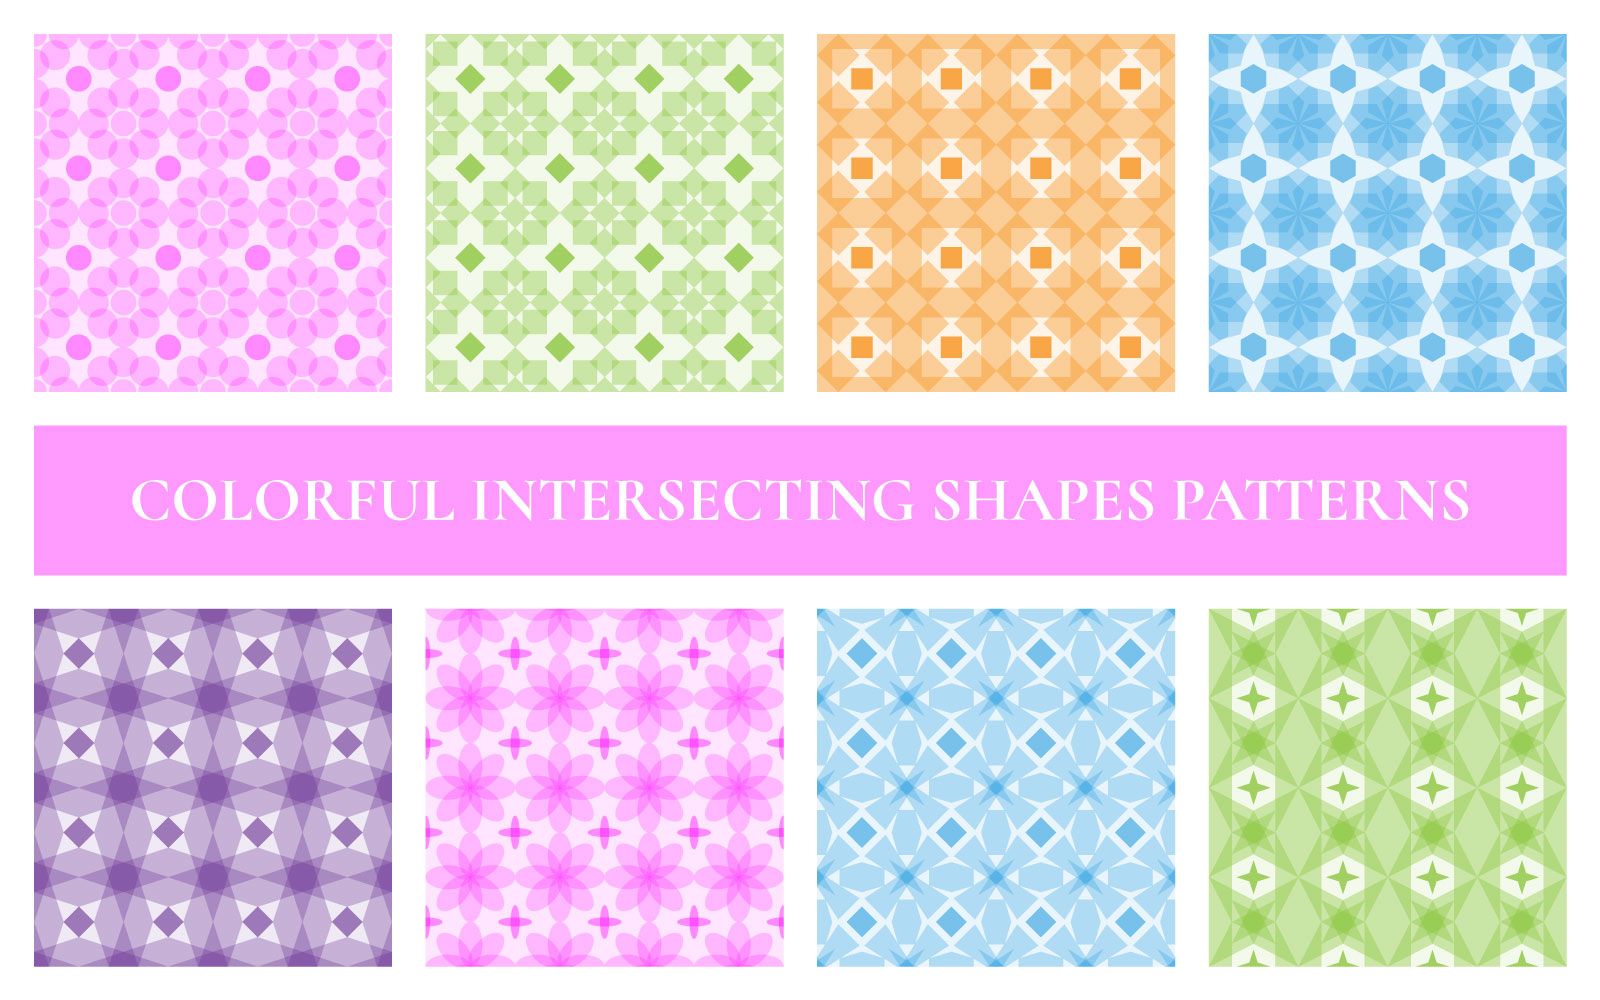 Patterns